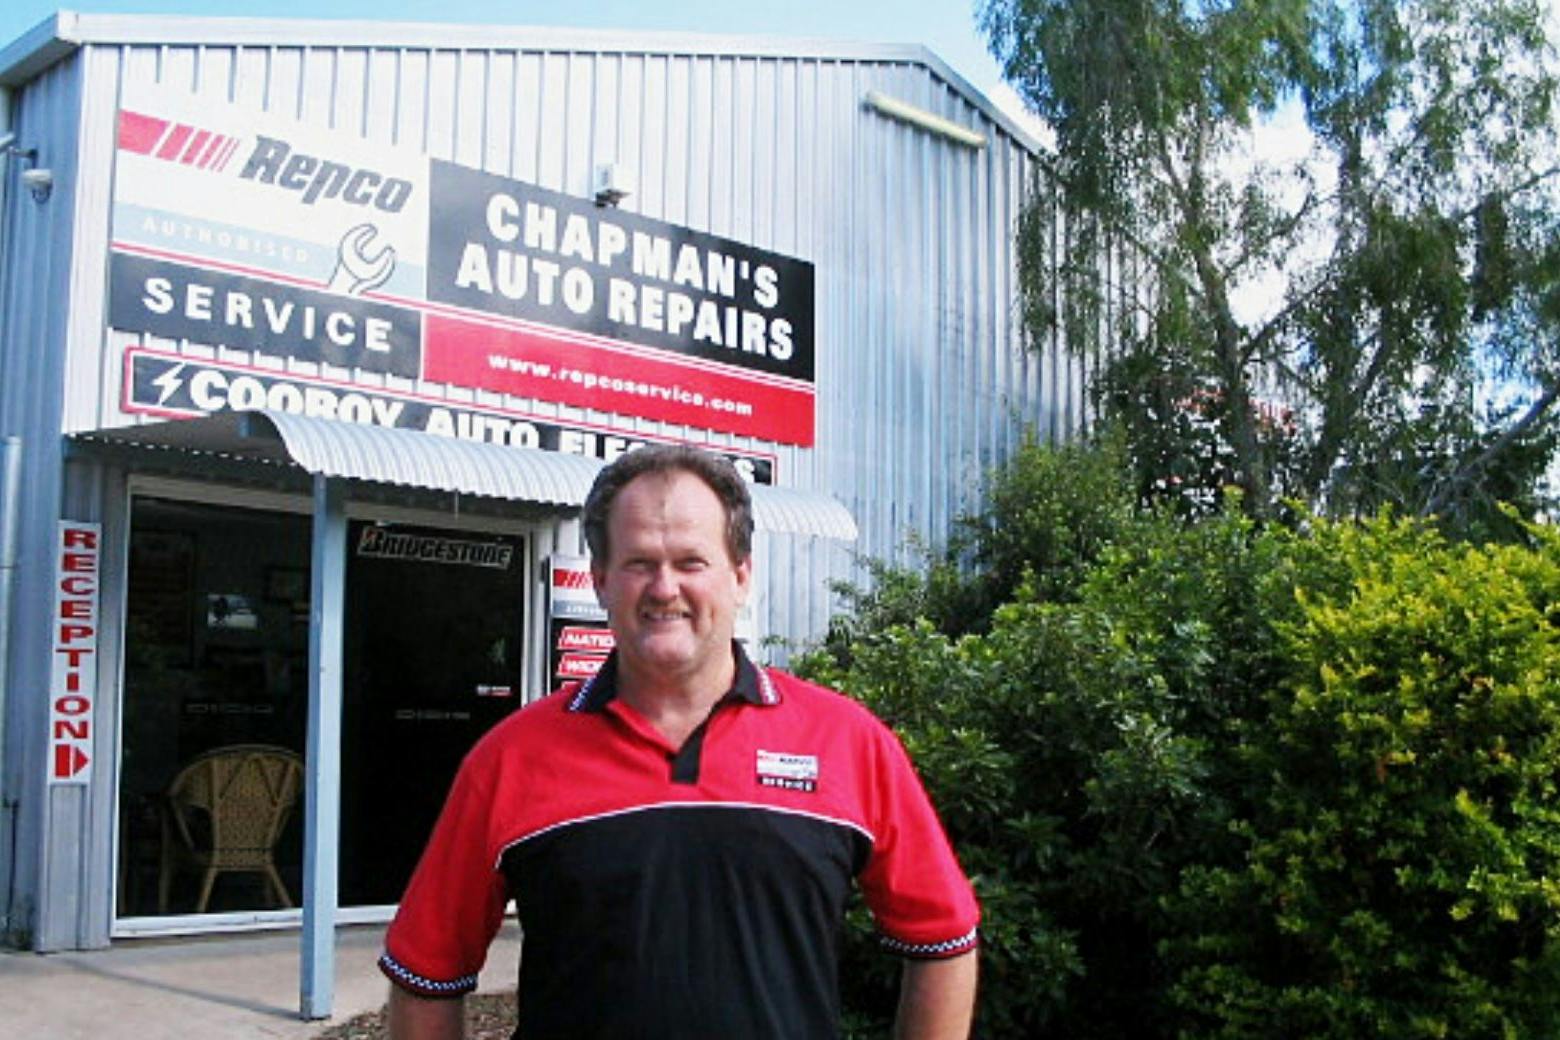 Chapmans Auto Repairs profile photo